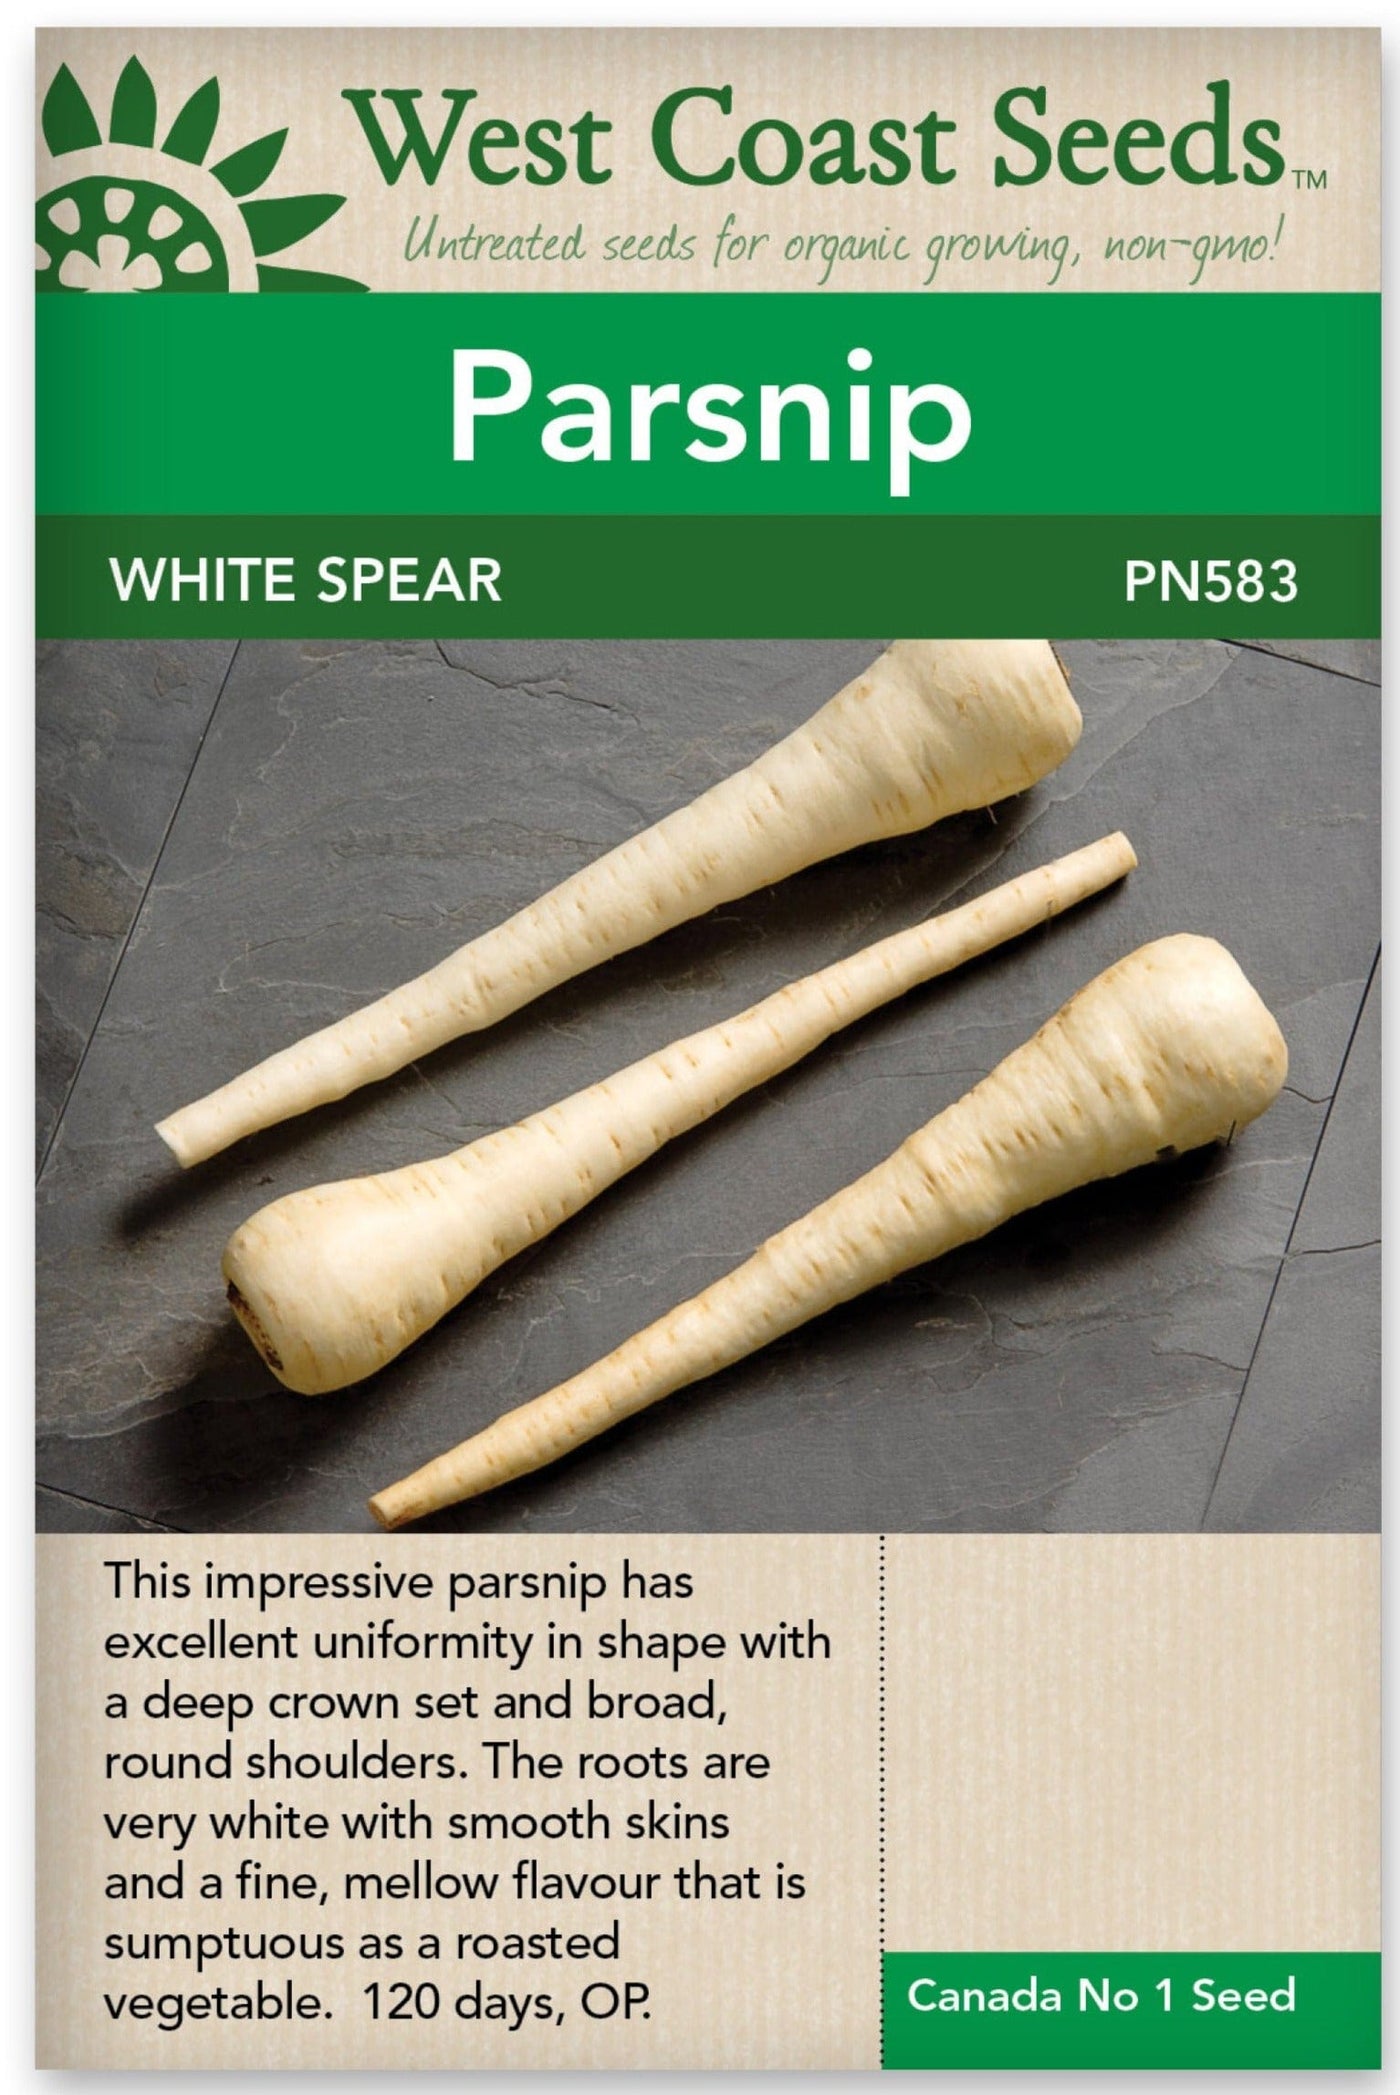 Parsnip White Spear - West Coast Seeds Ltd